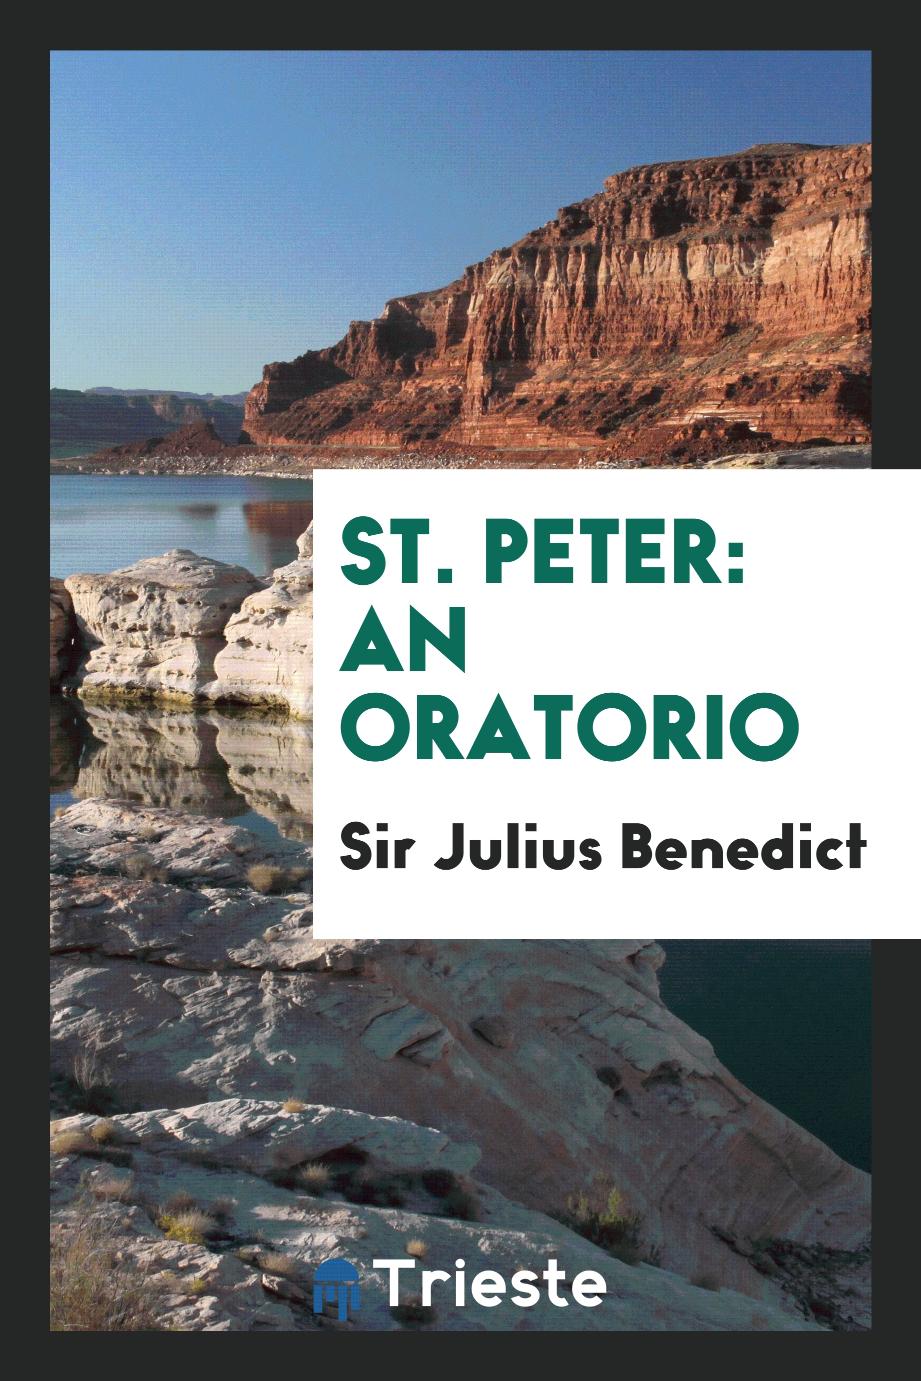 St. Peter: an oratorio